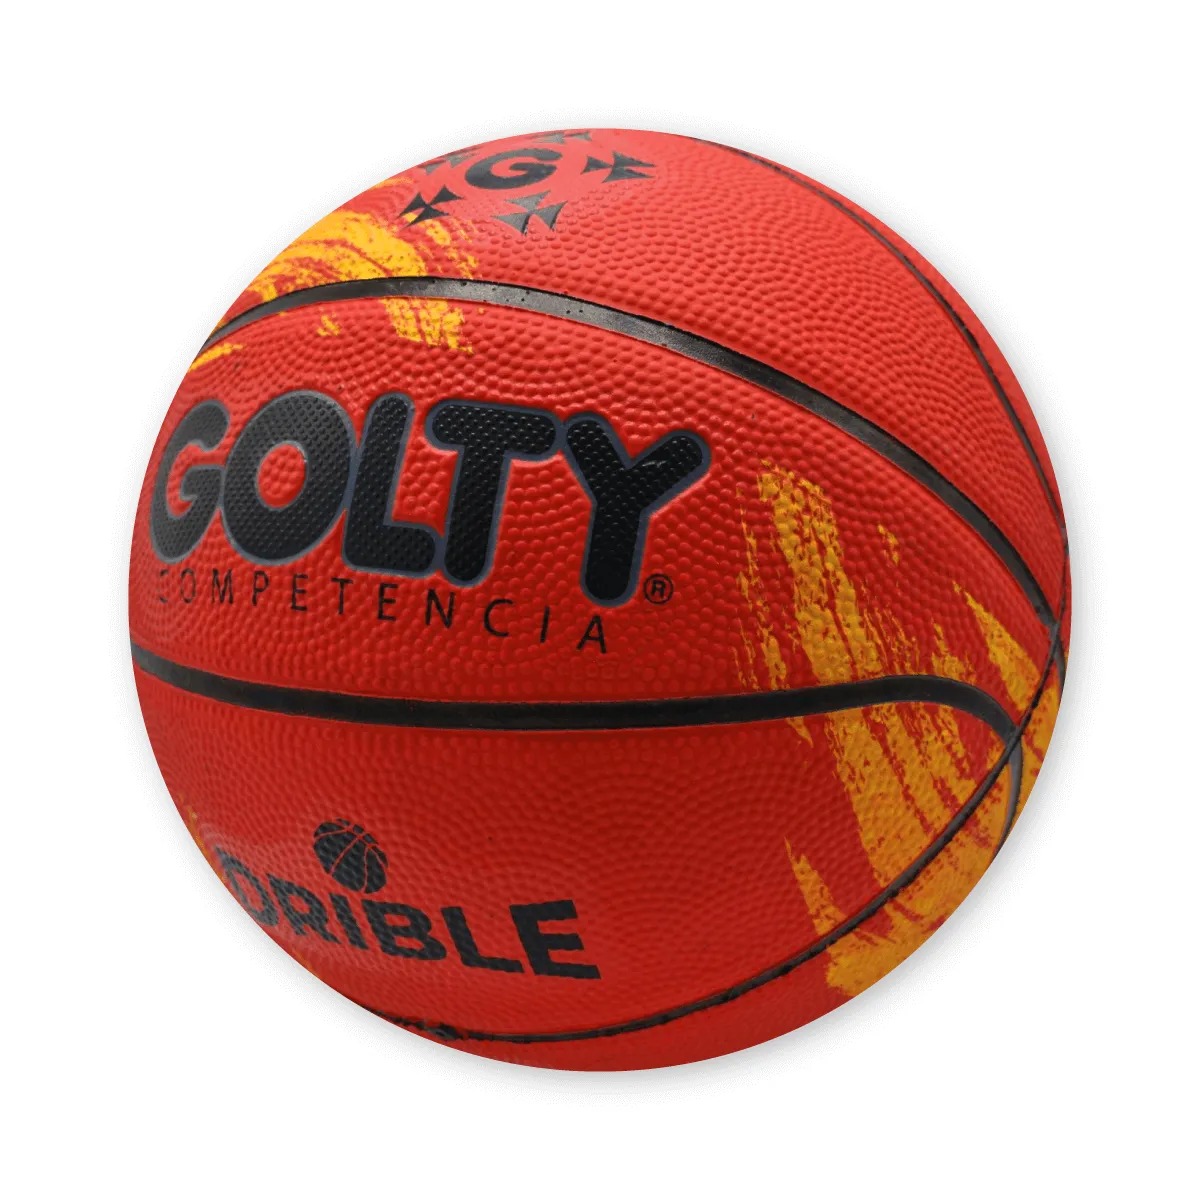 Balon Baloncesto Competencia Golty Drible N°7